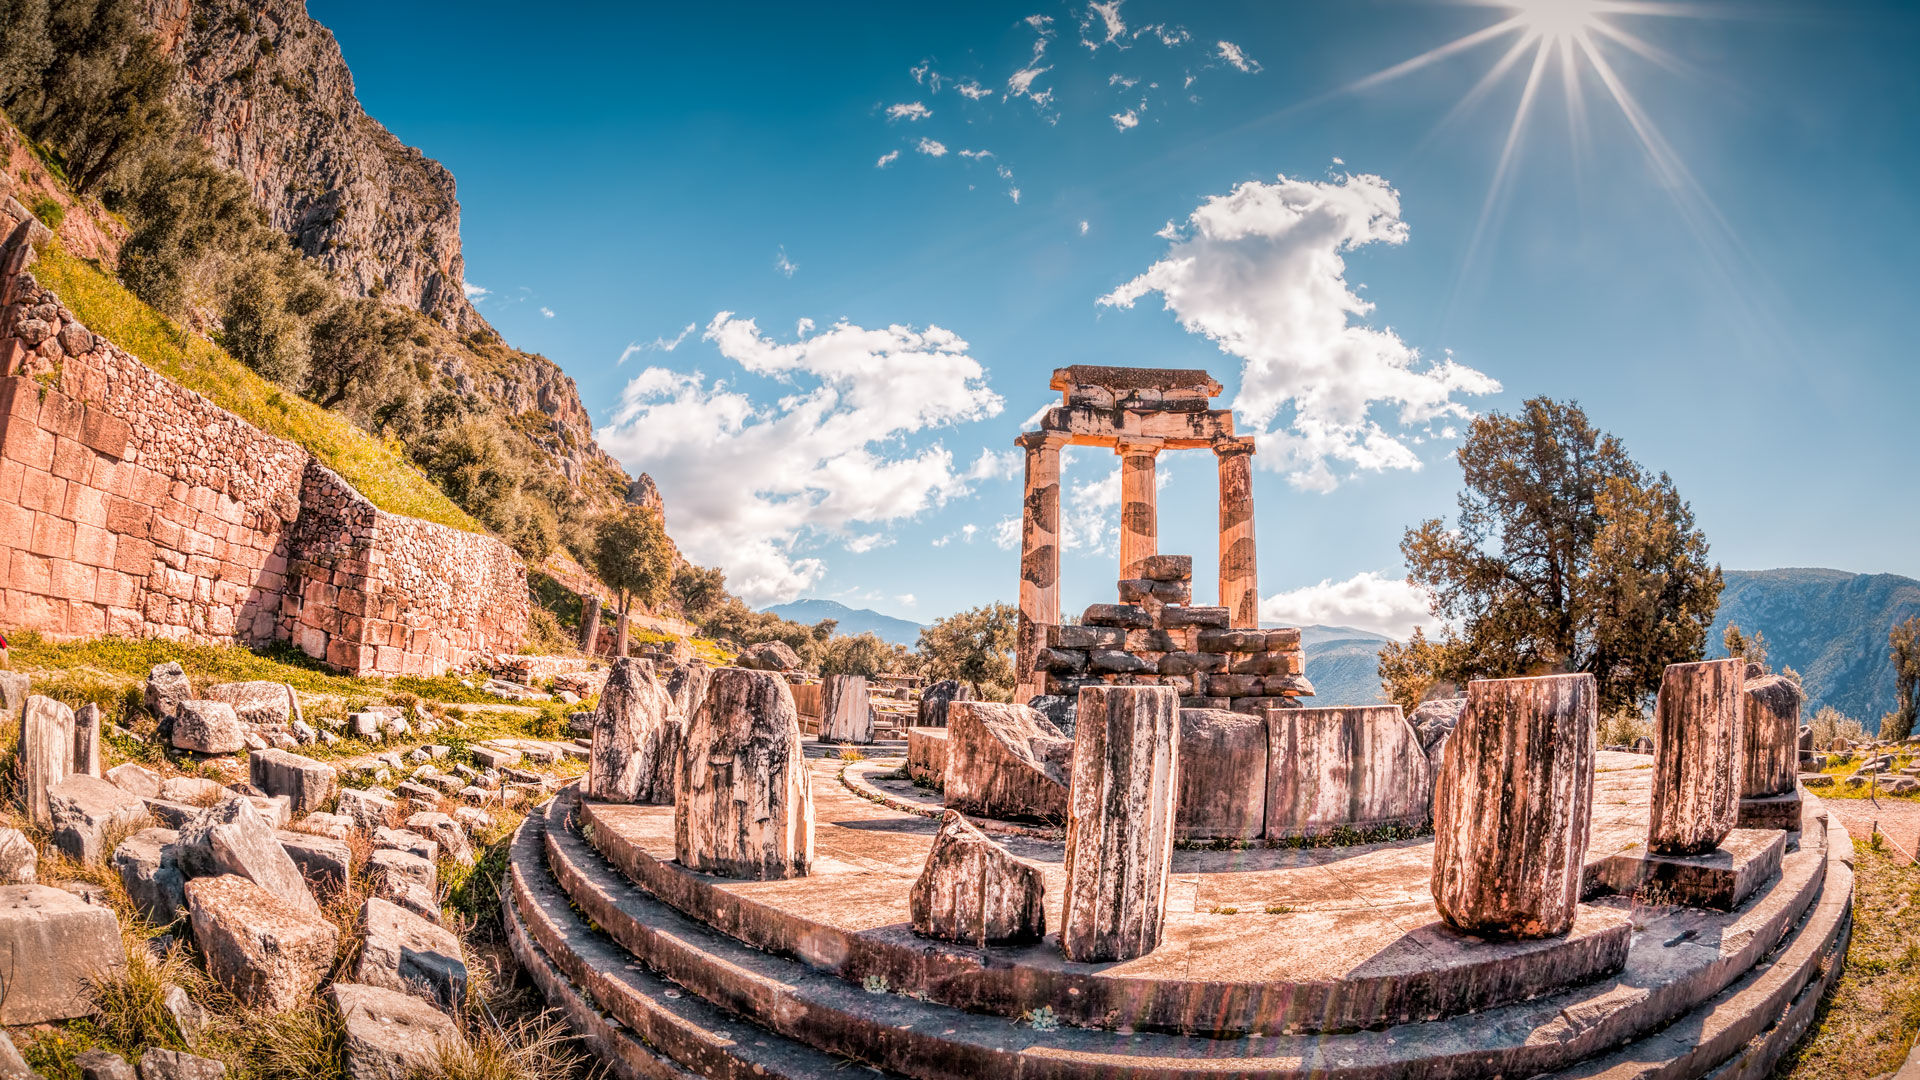 The Tholos of Athena Pronaia originally consisted of 20 Doric columns arranged around 10 Corinthian columns